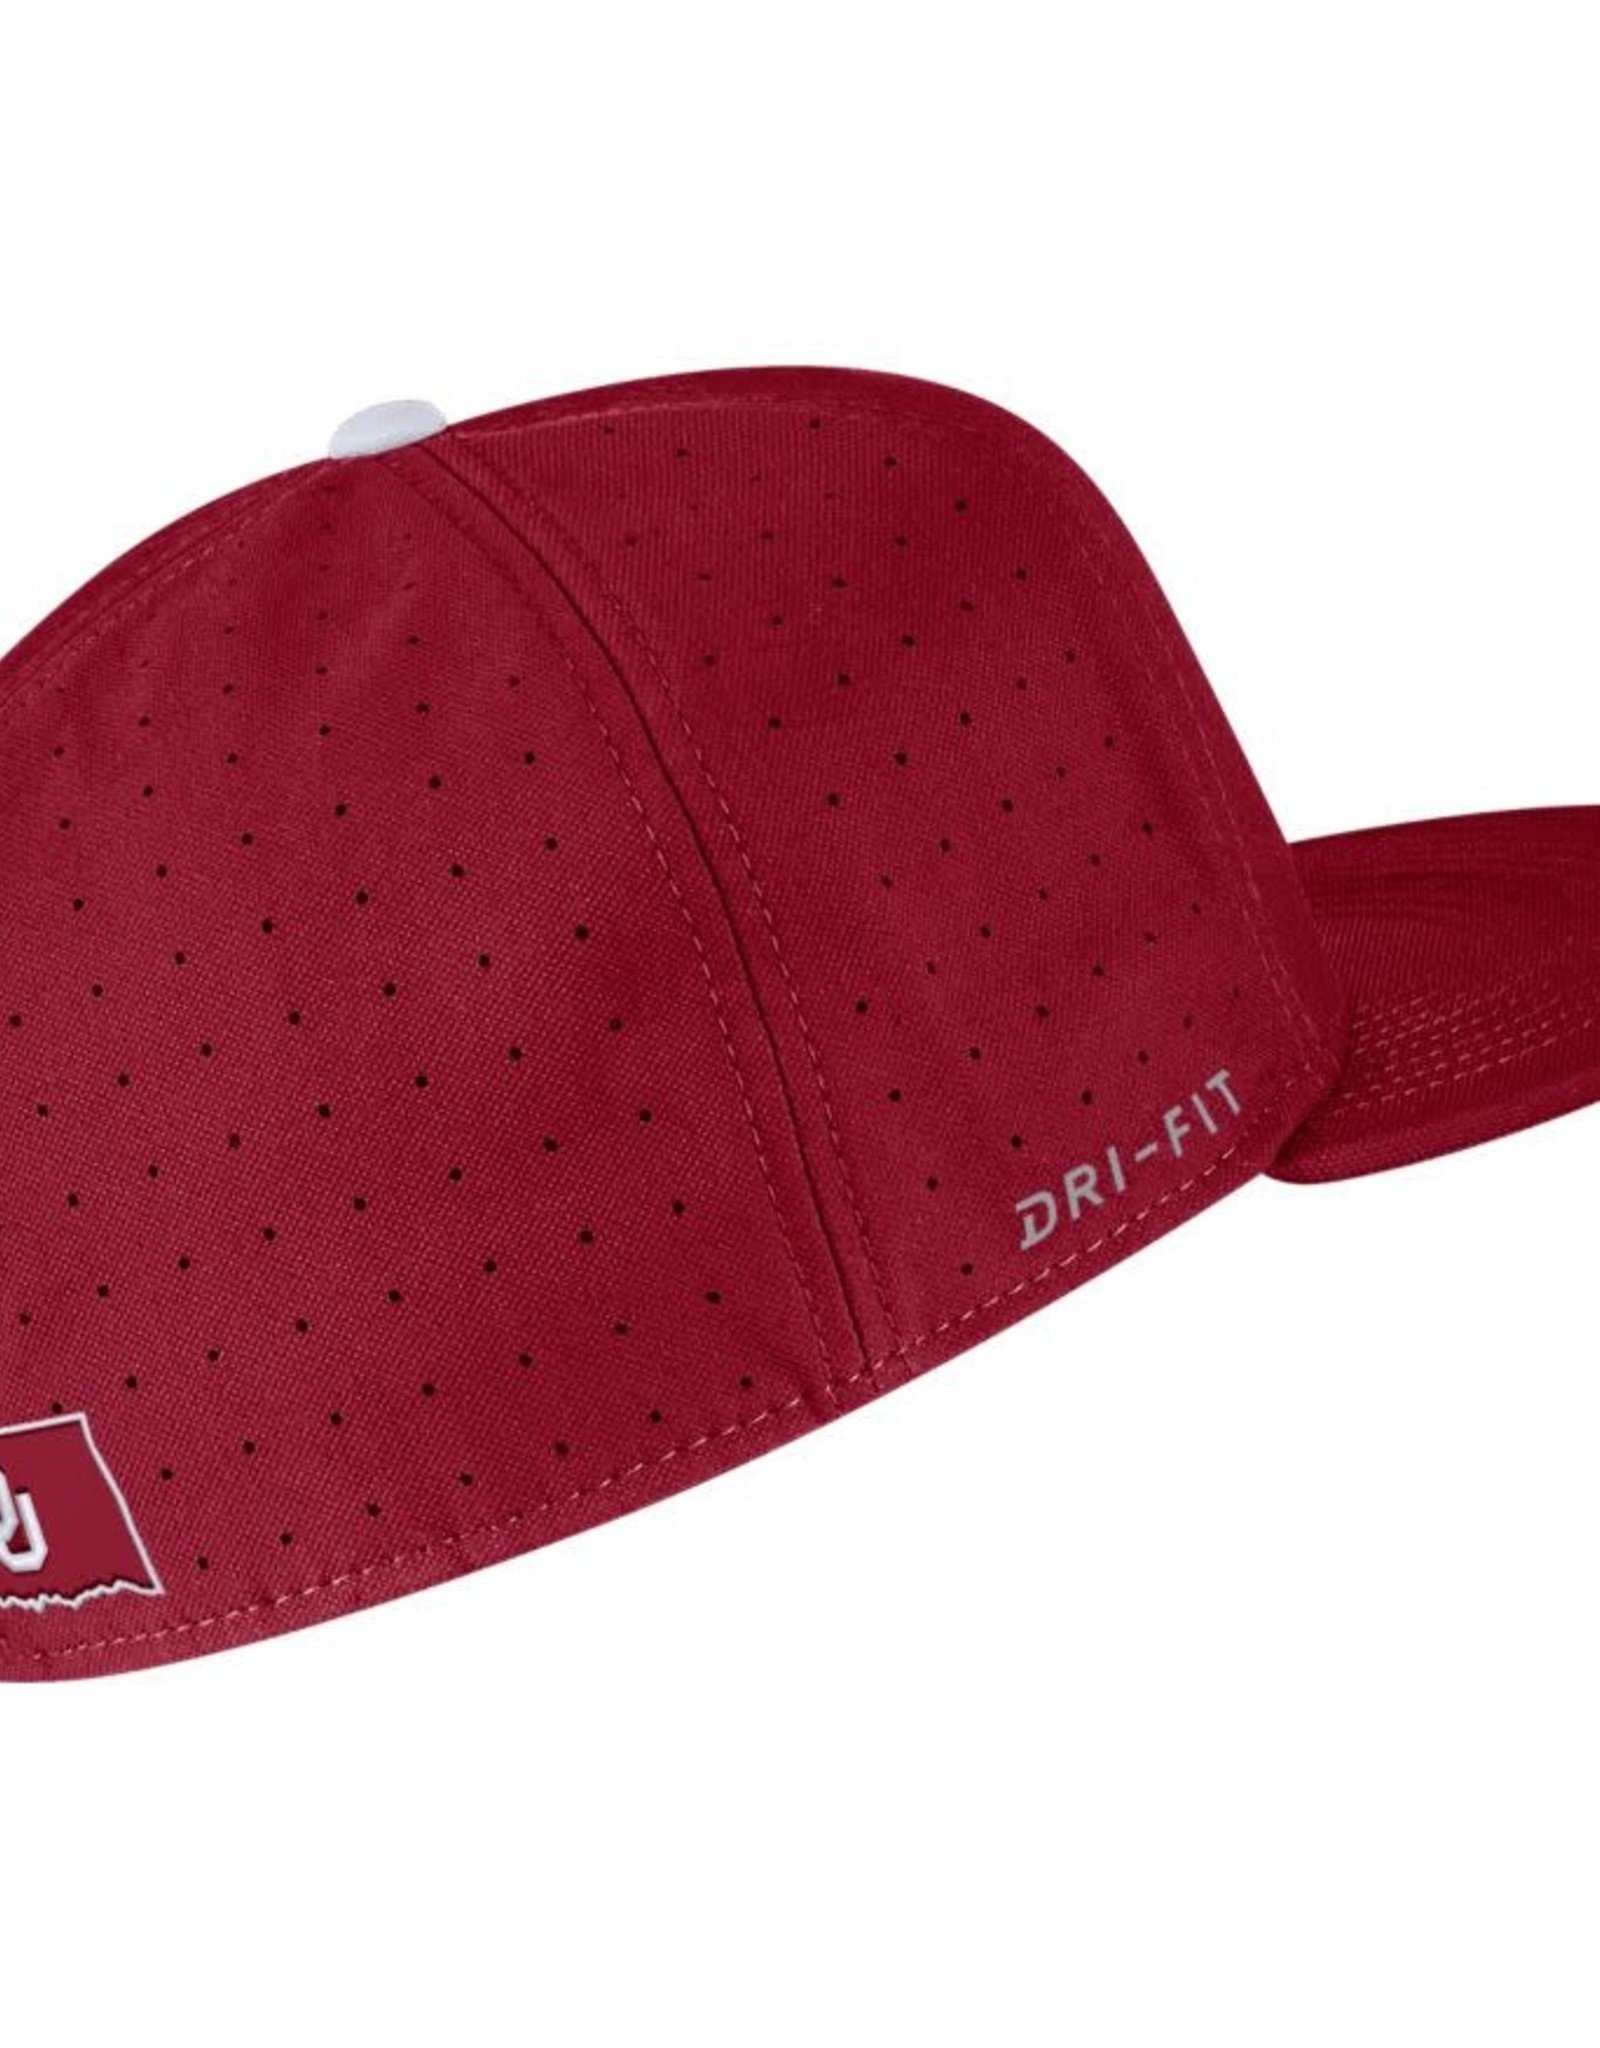 Nike Nike Oklahoma AeroBill On Field Crimson Baseball Hat